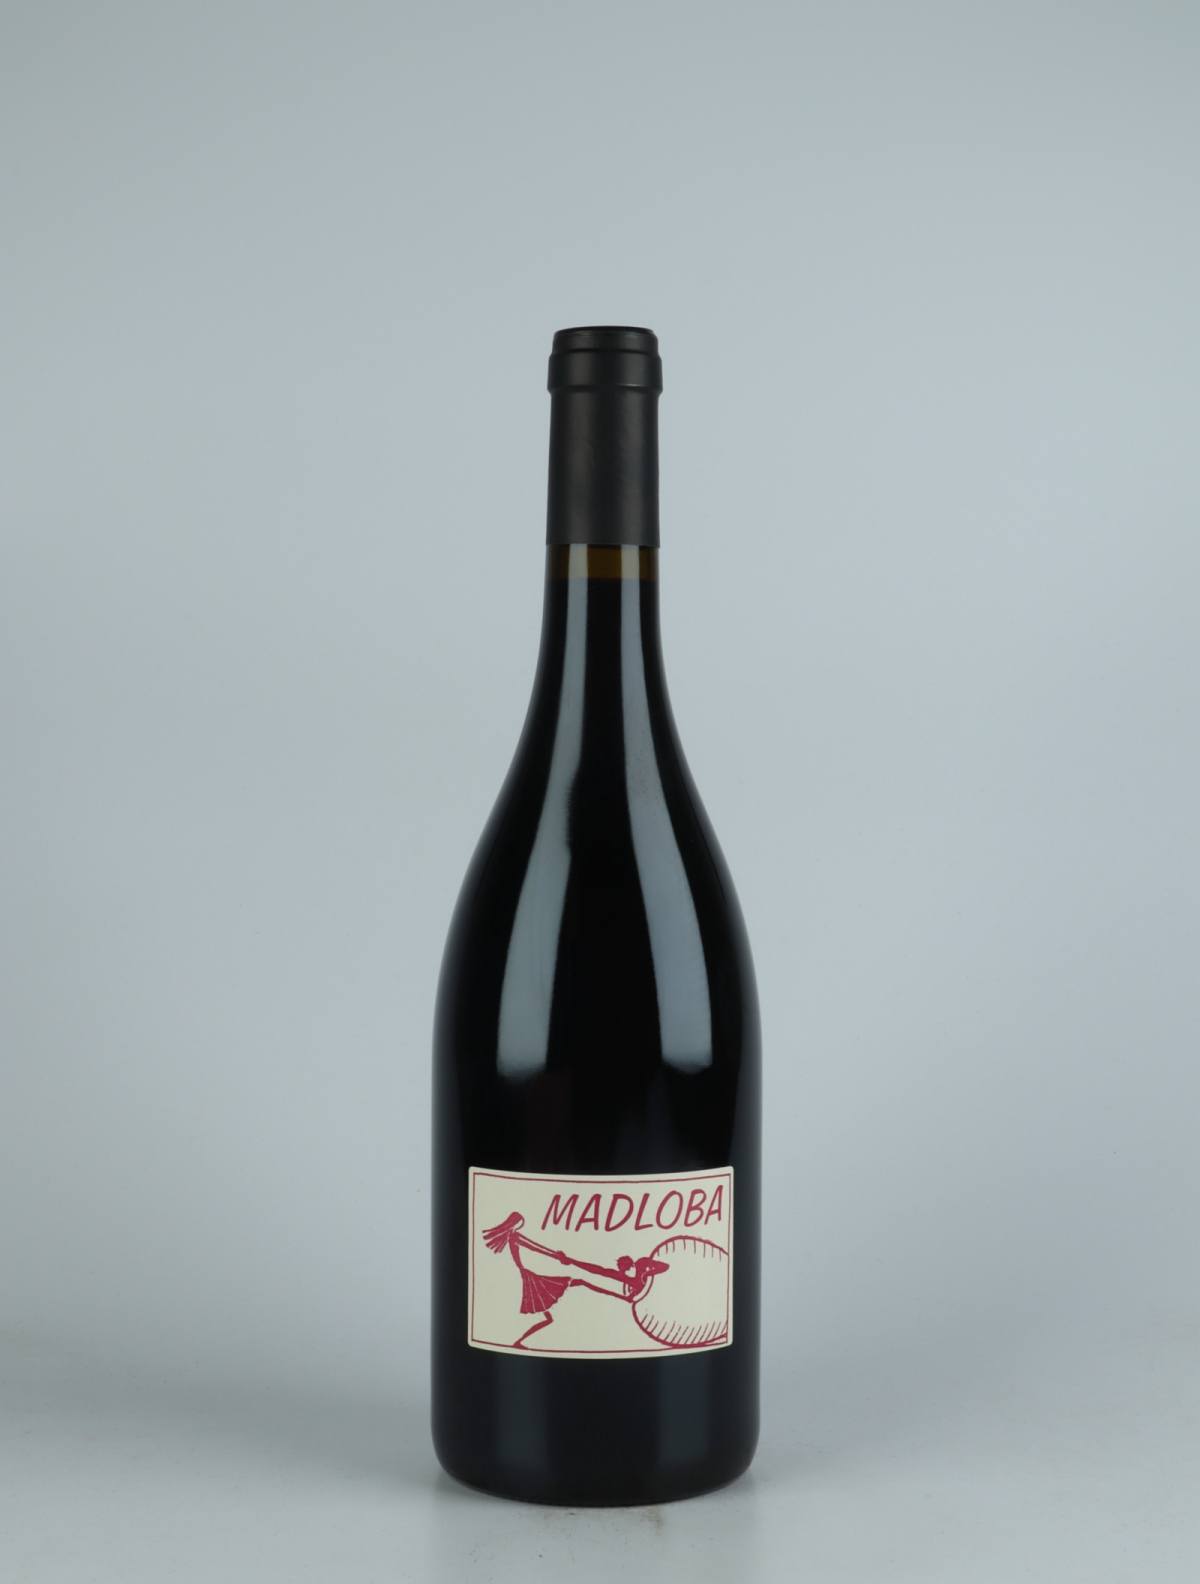 A bottle 2020 Saint-Joseph Madloba Red wine from Domaine des Miquettes, Rhône in France